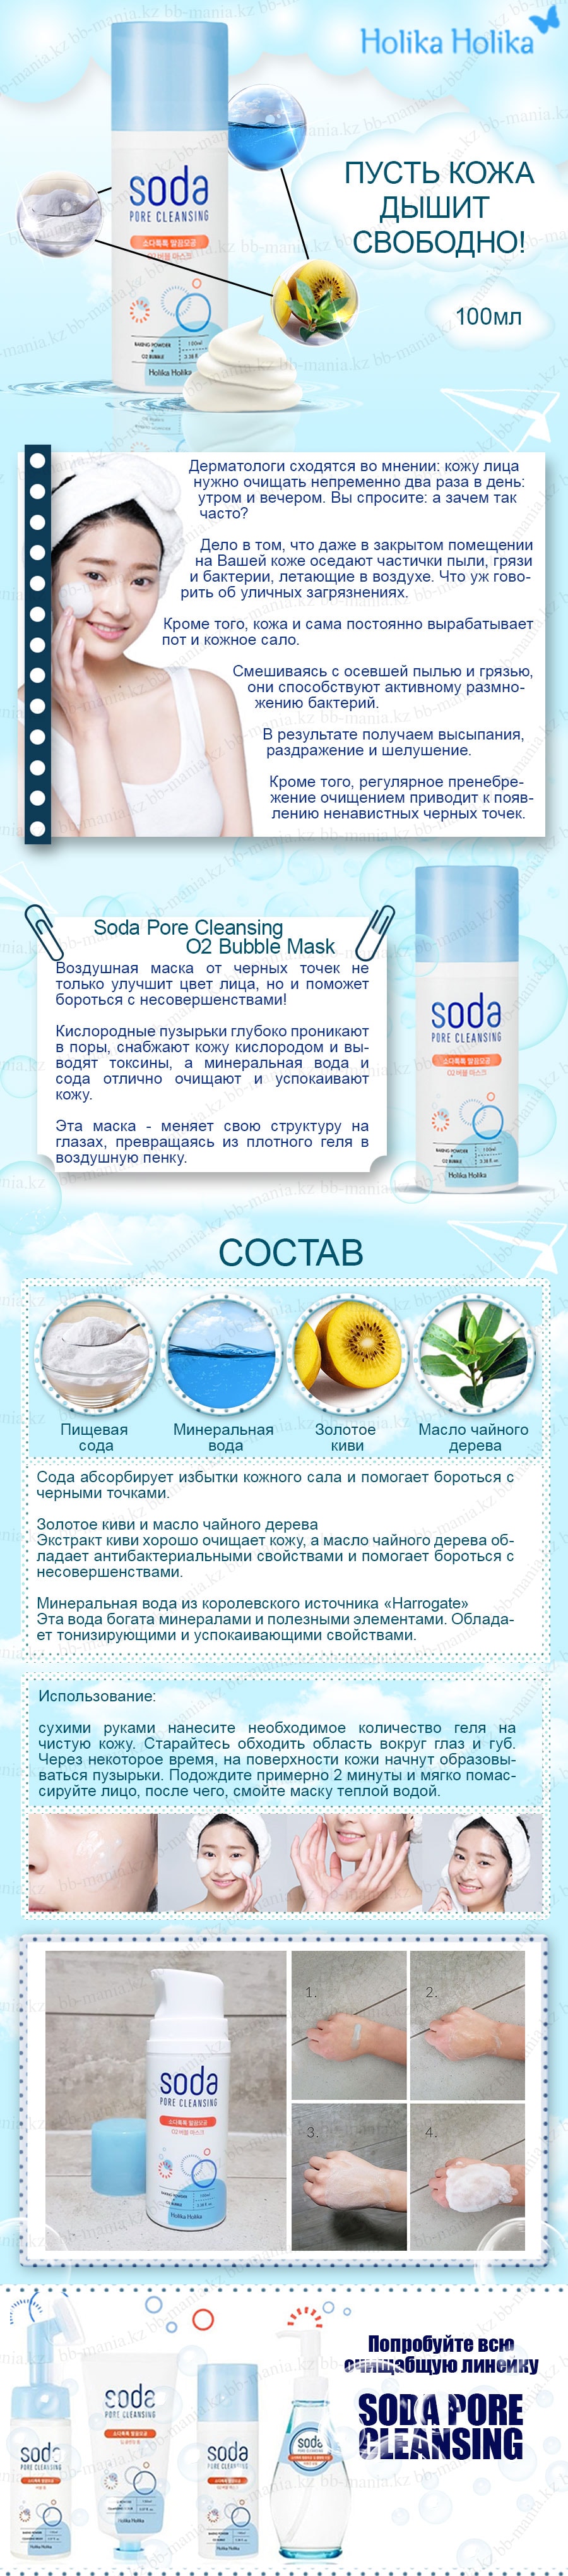 Soda-Pore-Cleansing-O2-Bubble-Mask-[Holika-Holika]-min